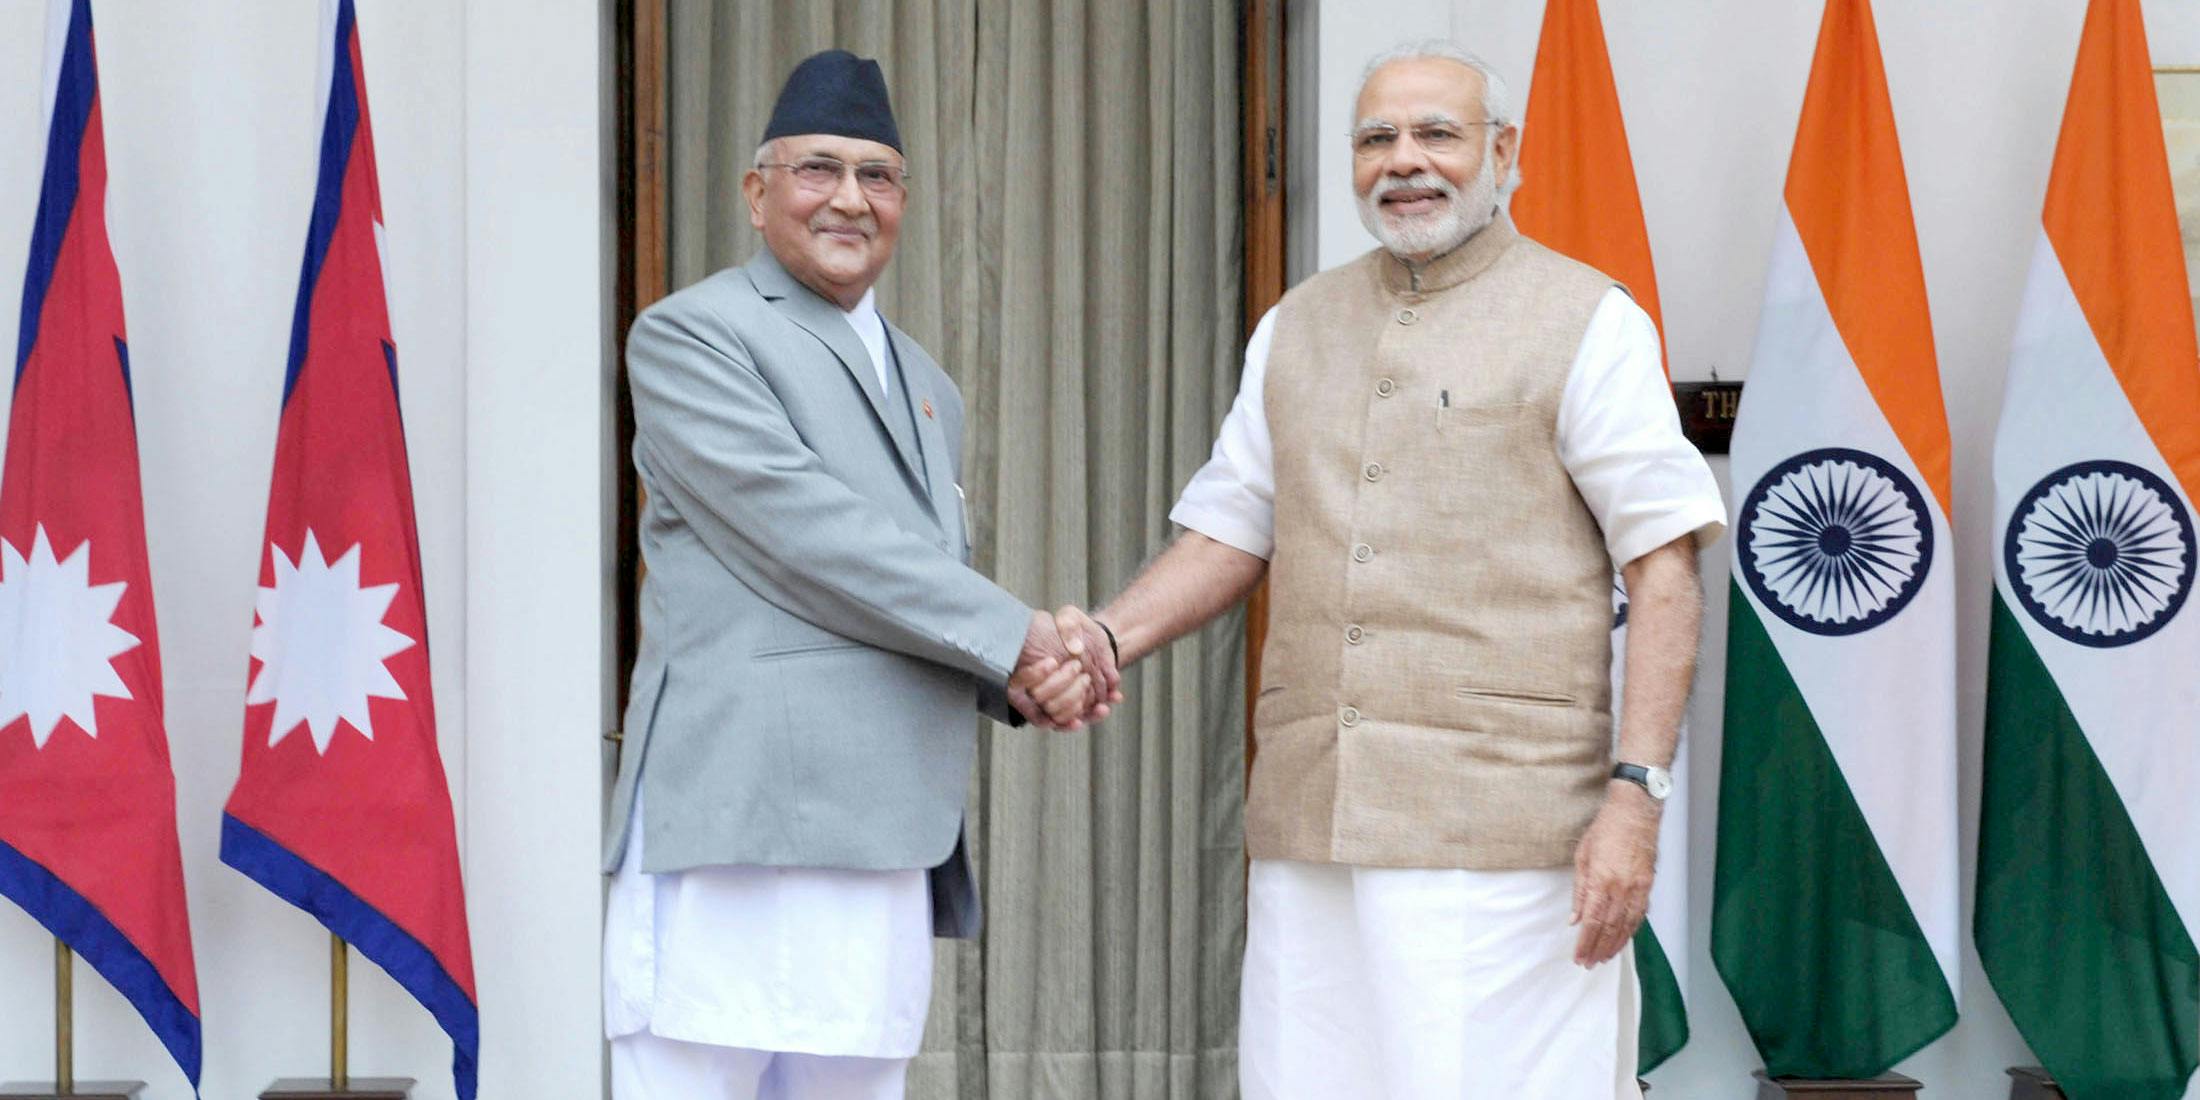 Nepal Prime Minister KP Sharma Oli and Indian Prime Minister Narendra Modi, pictured in New Delhi in 2016. (India Prime Minister’s Office)